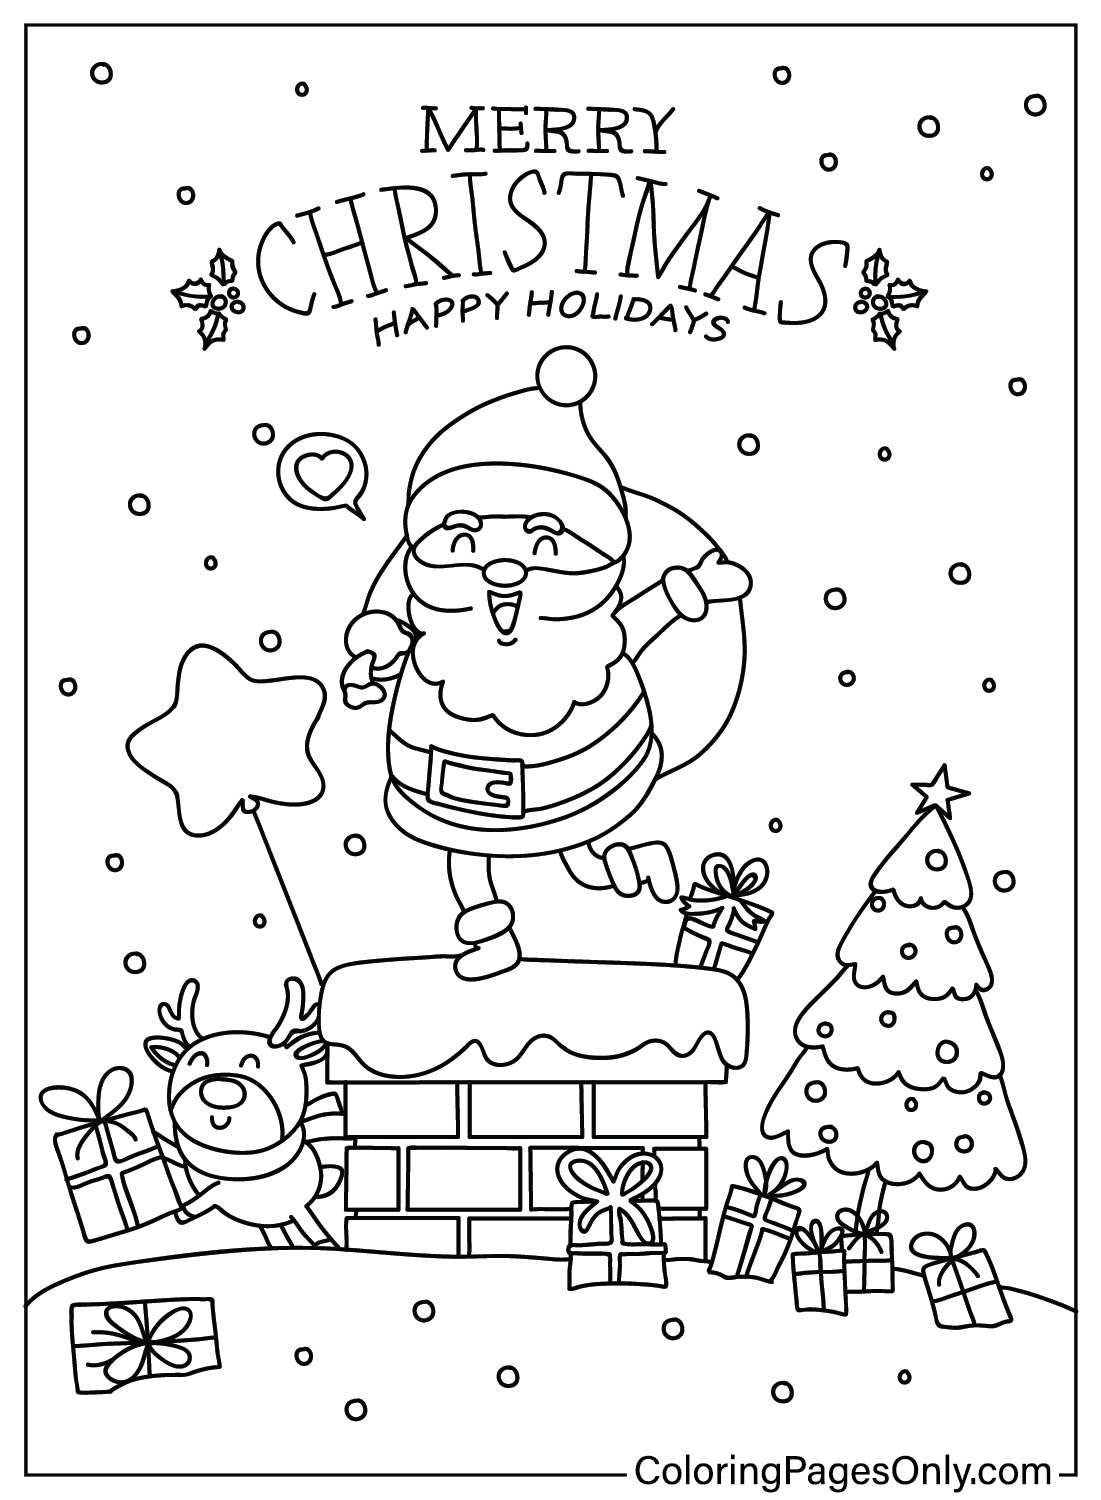 Santa Claus Coloring Page to Print